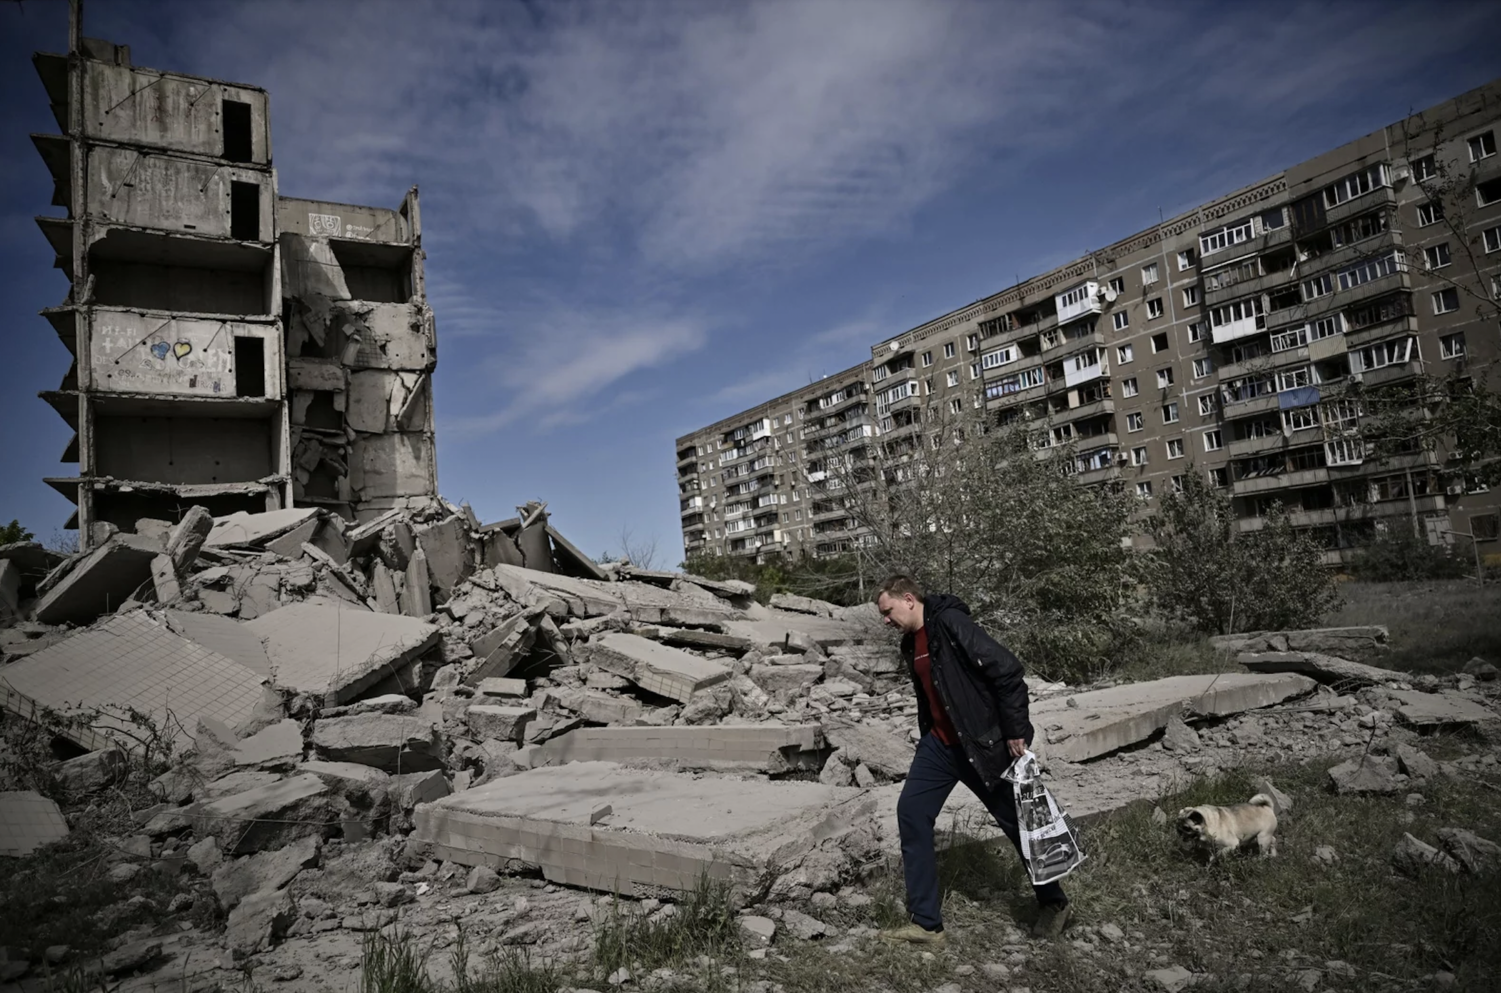 A man walks past a damaged building after a strike in Kramatorsk in the eastern Ukrainian region of Donbas, on Wednesday.
